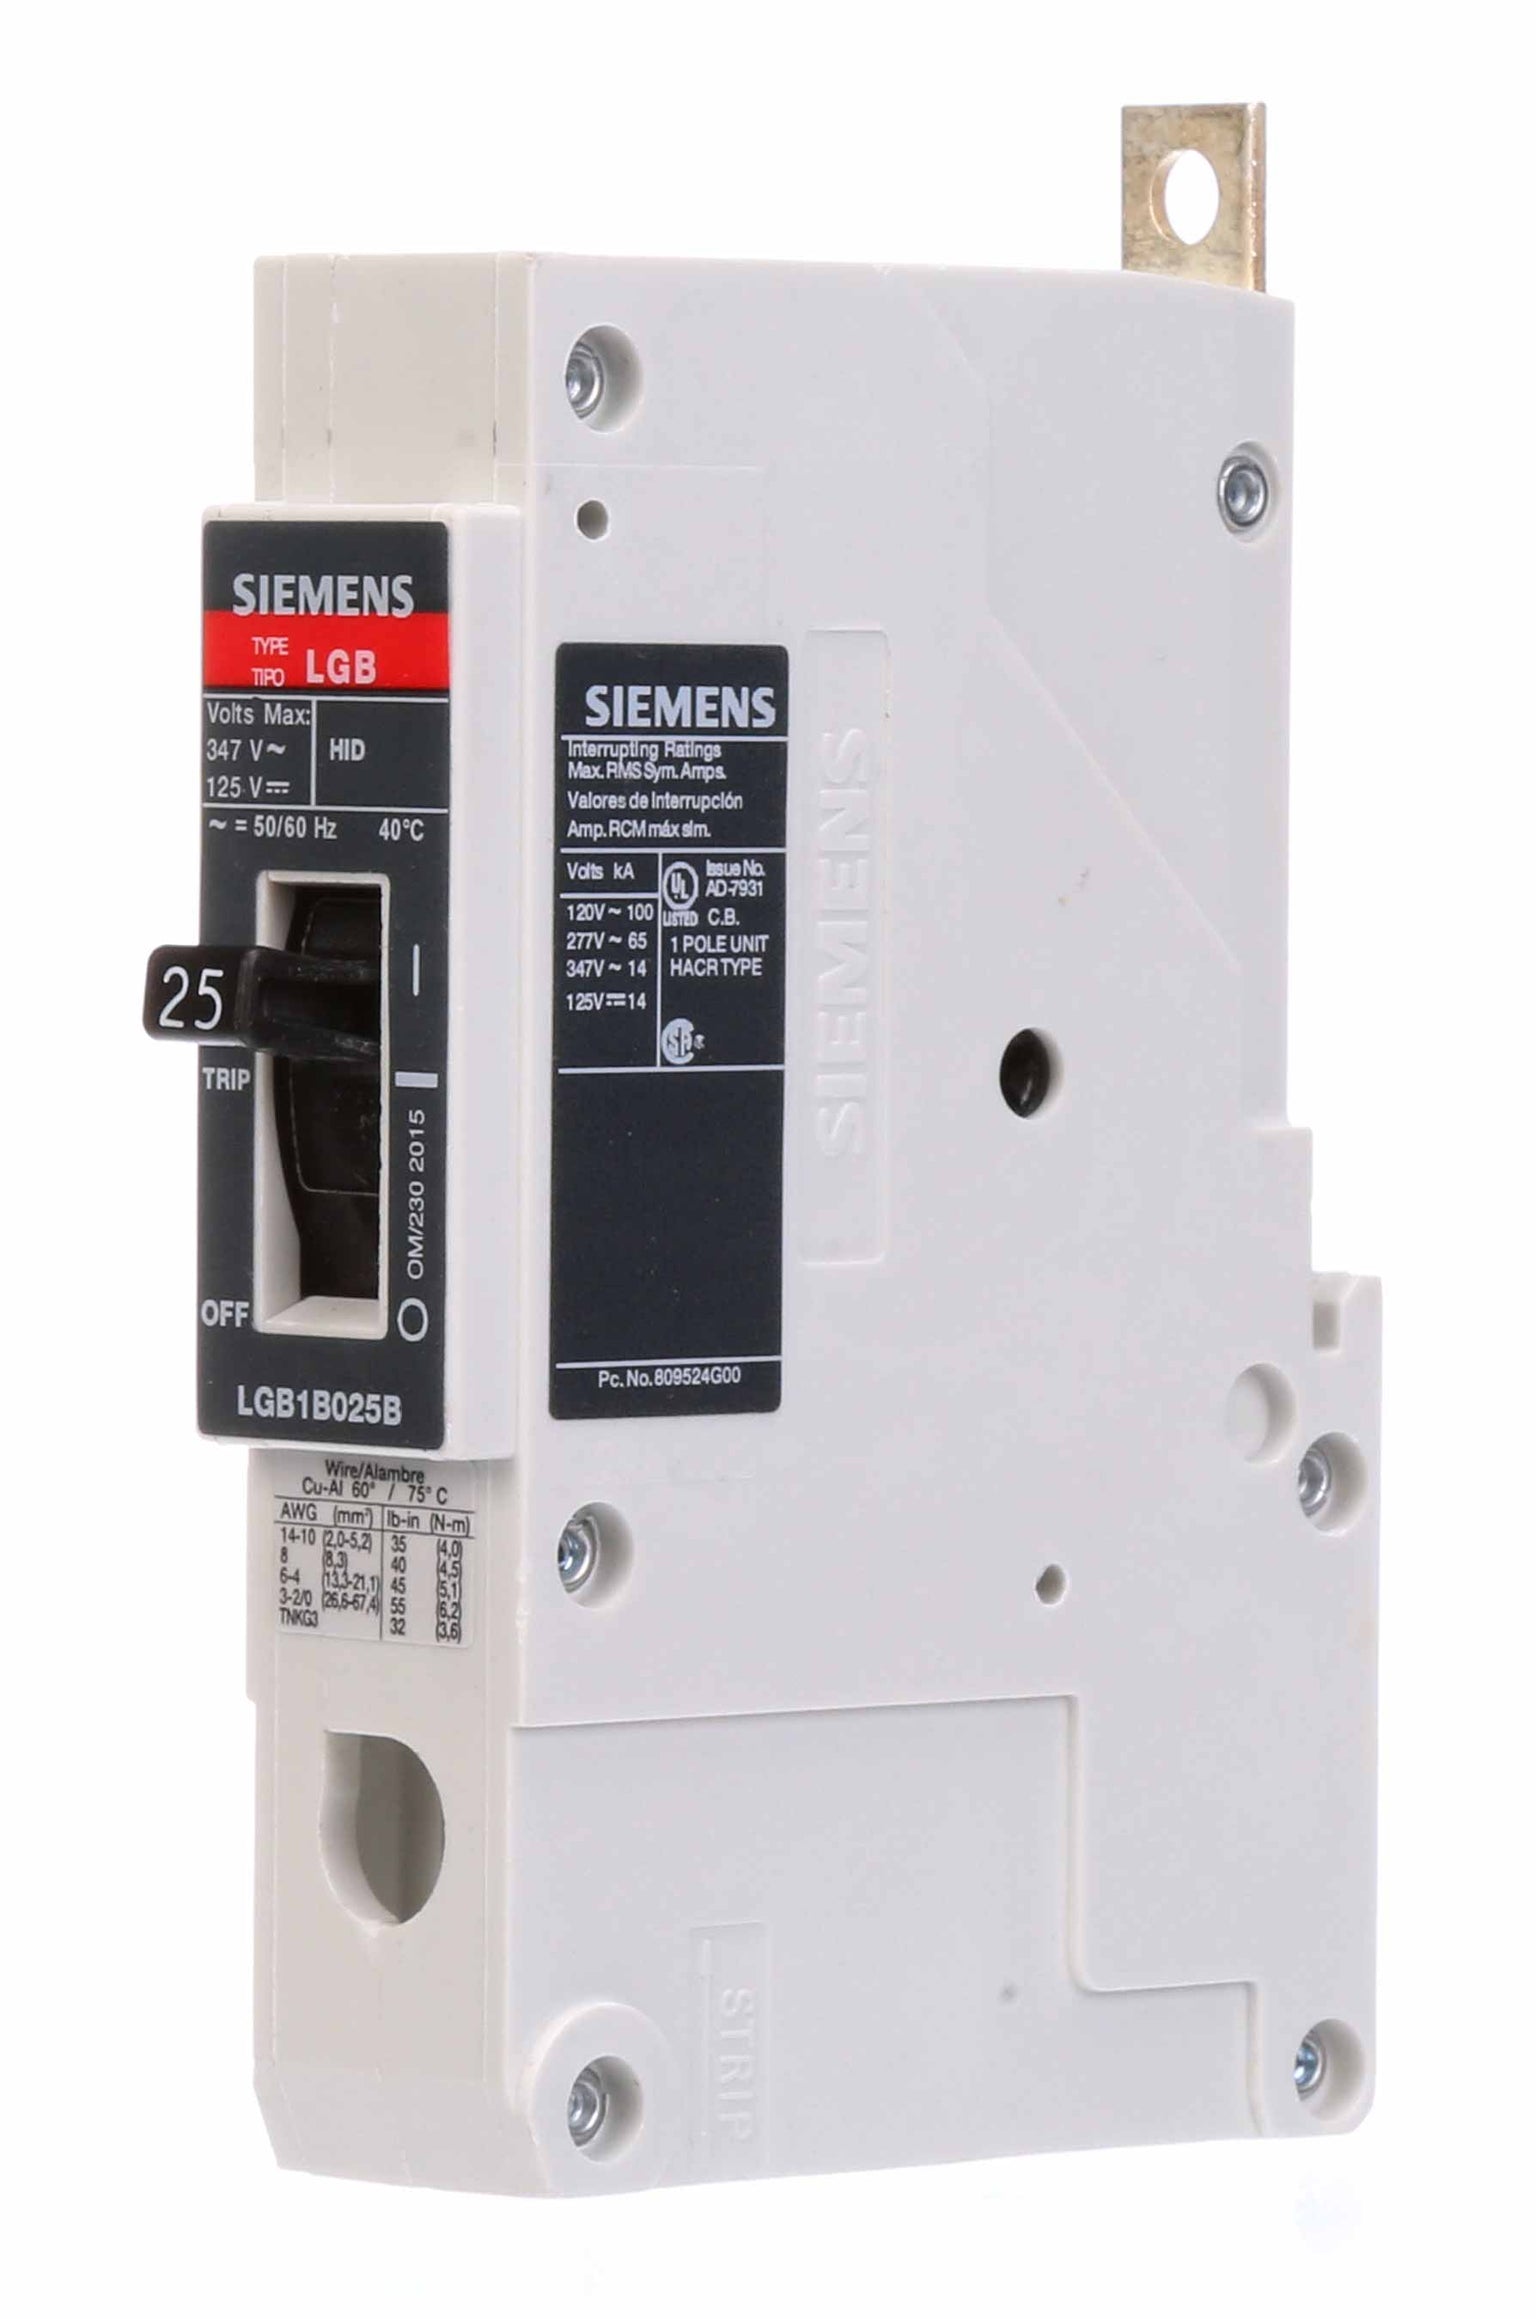 LGB1B025B - Siemens - Molded Case Circuit Breaker